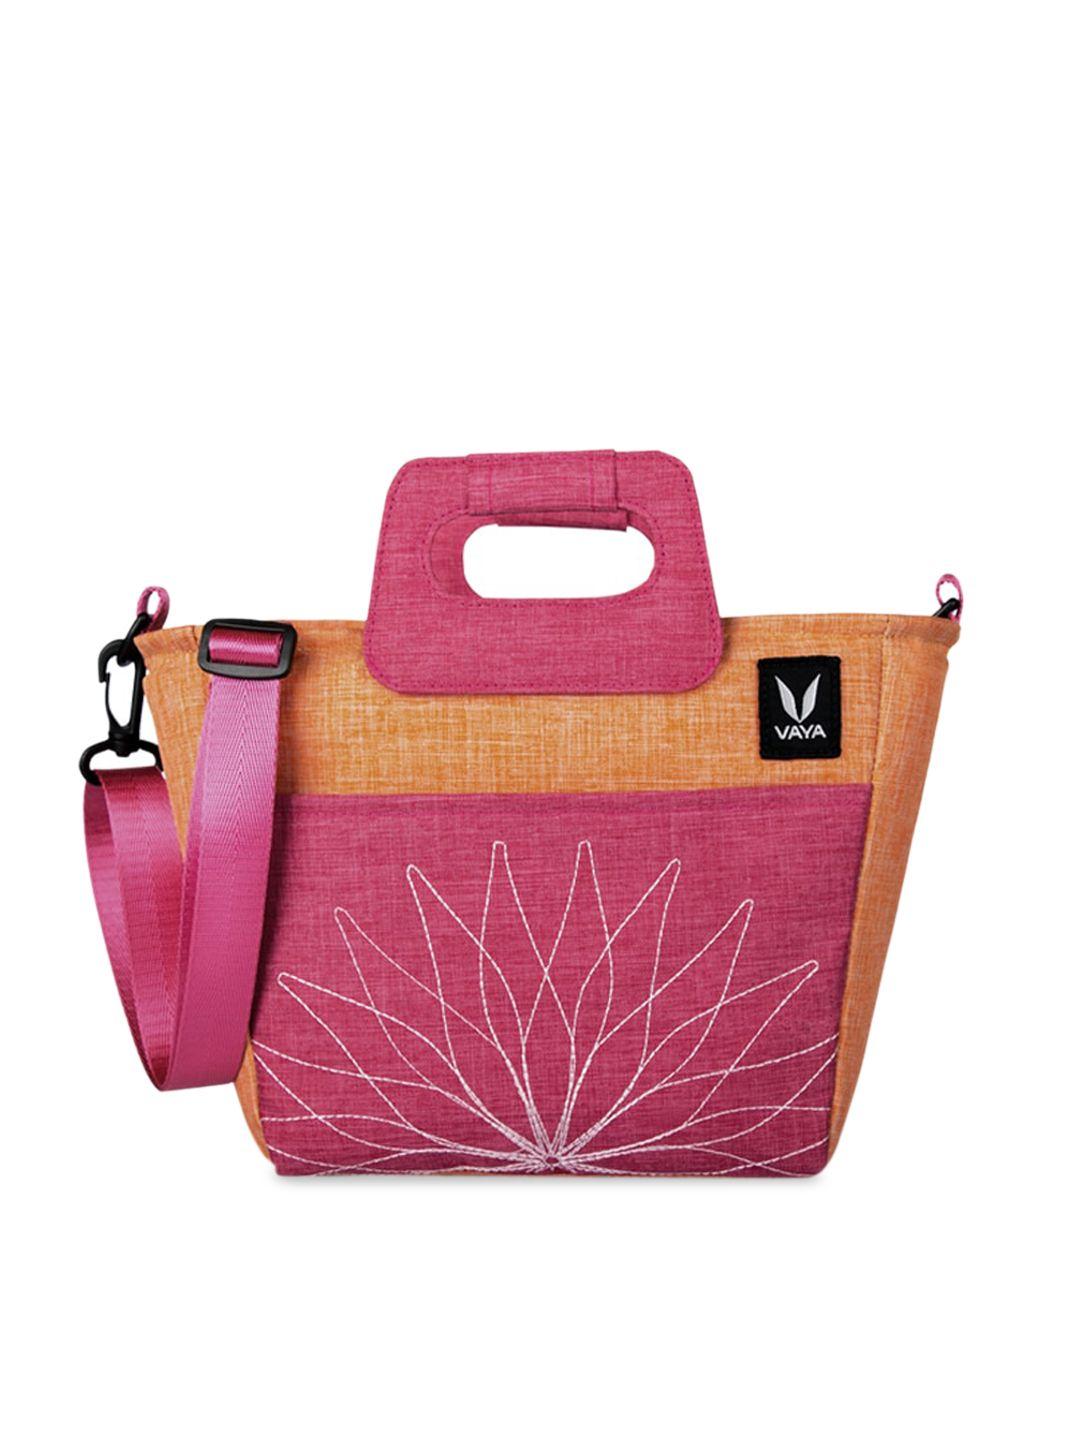 vaya orange & pink insulated waterproof lunch bag